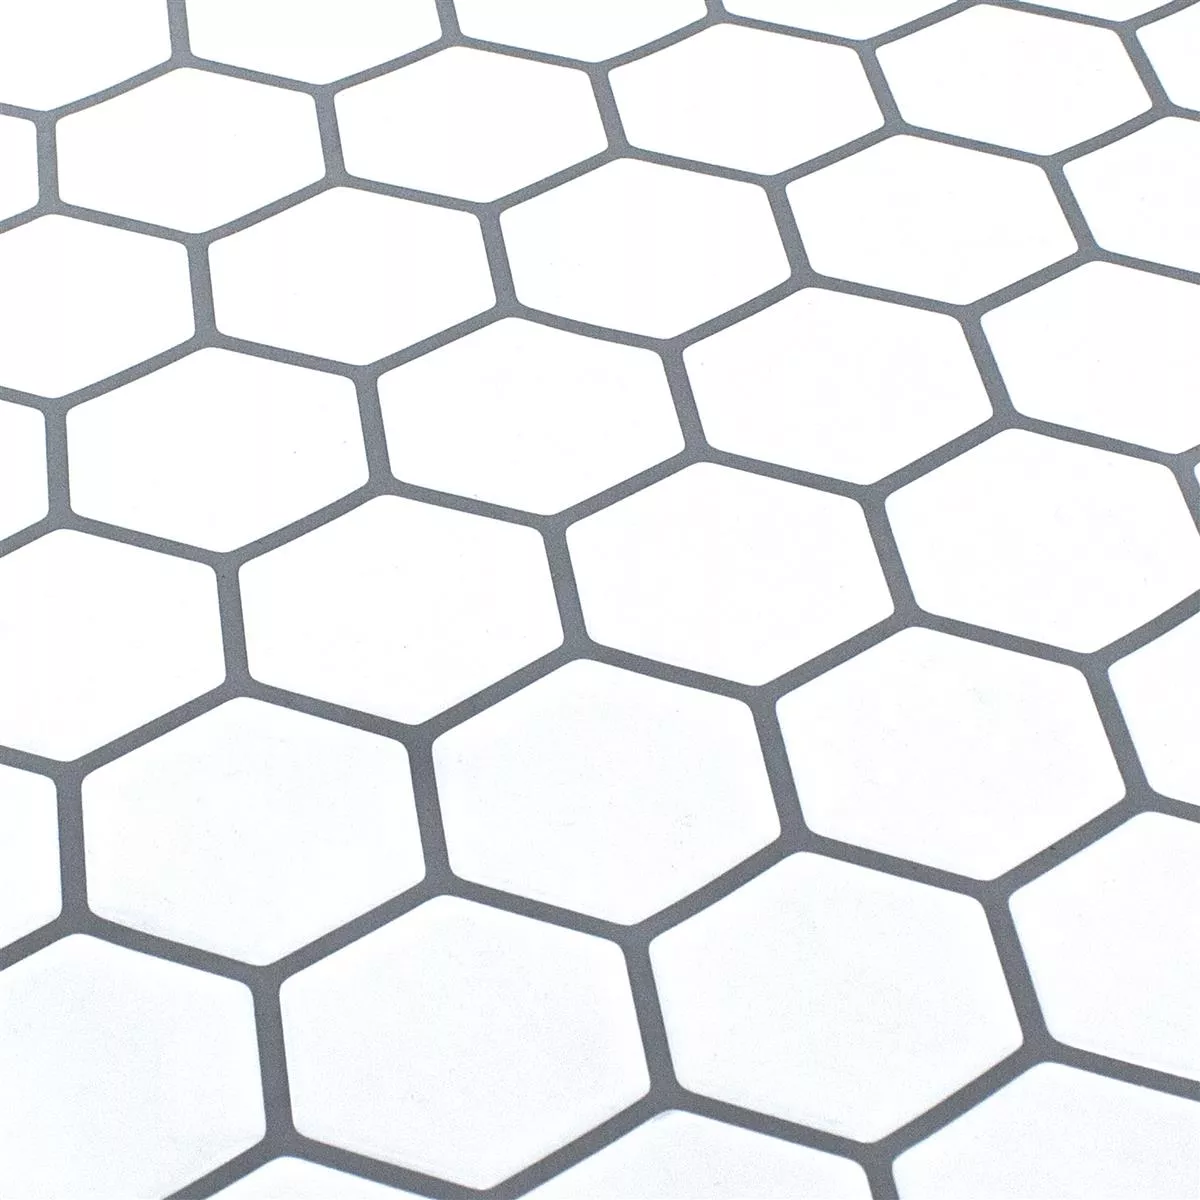 Sample Vinyl Mosaic Tiles Edinburg Hexagon Blanc Self Adhesive